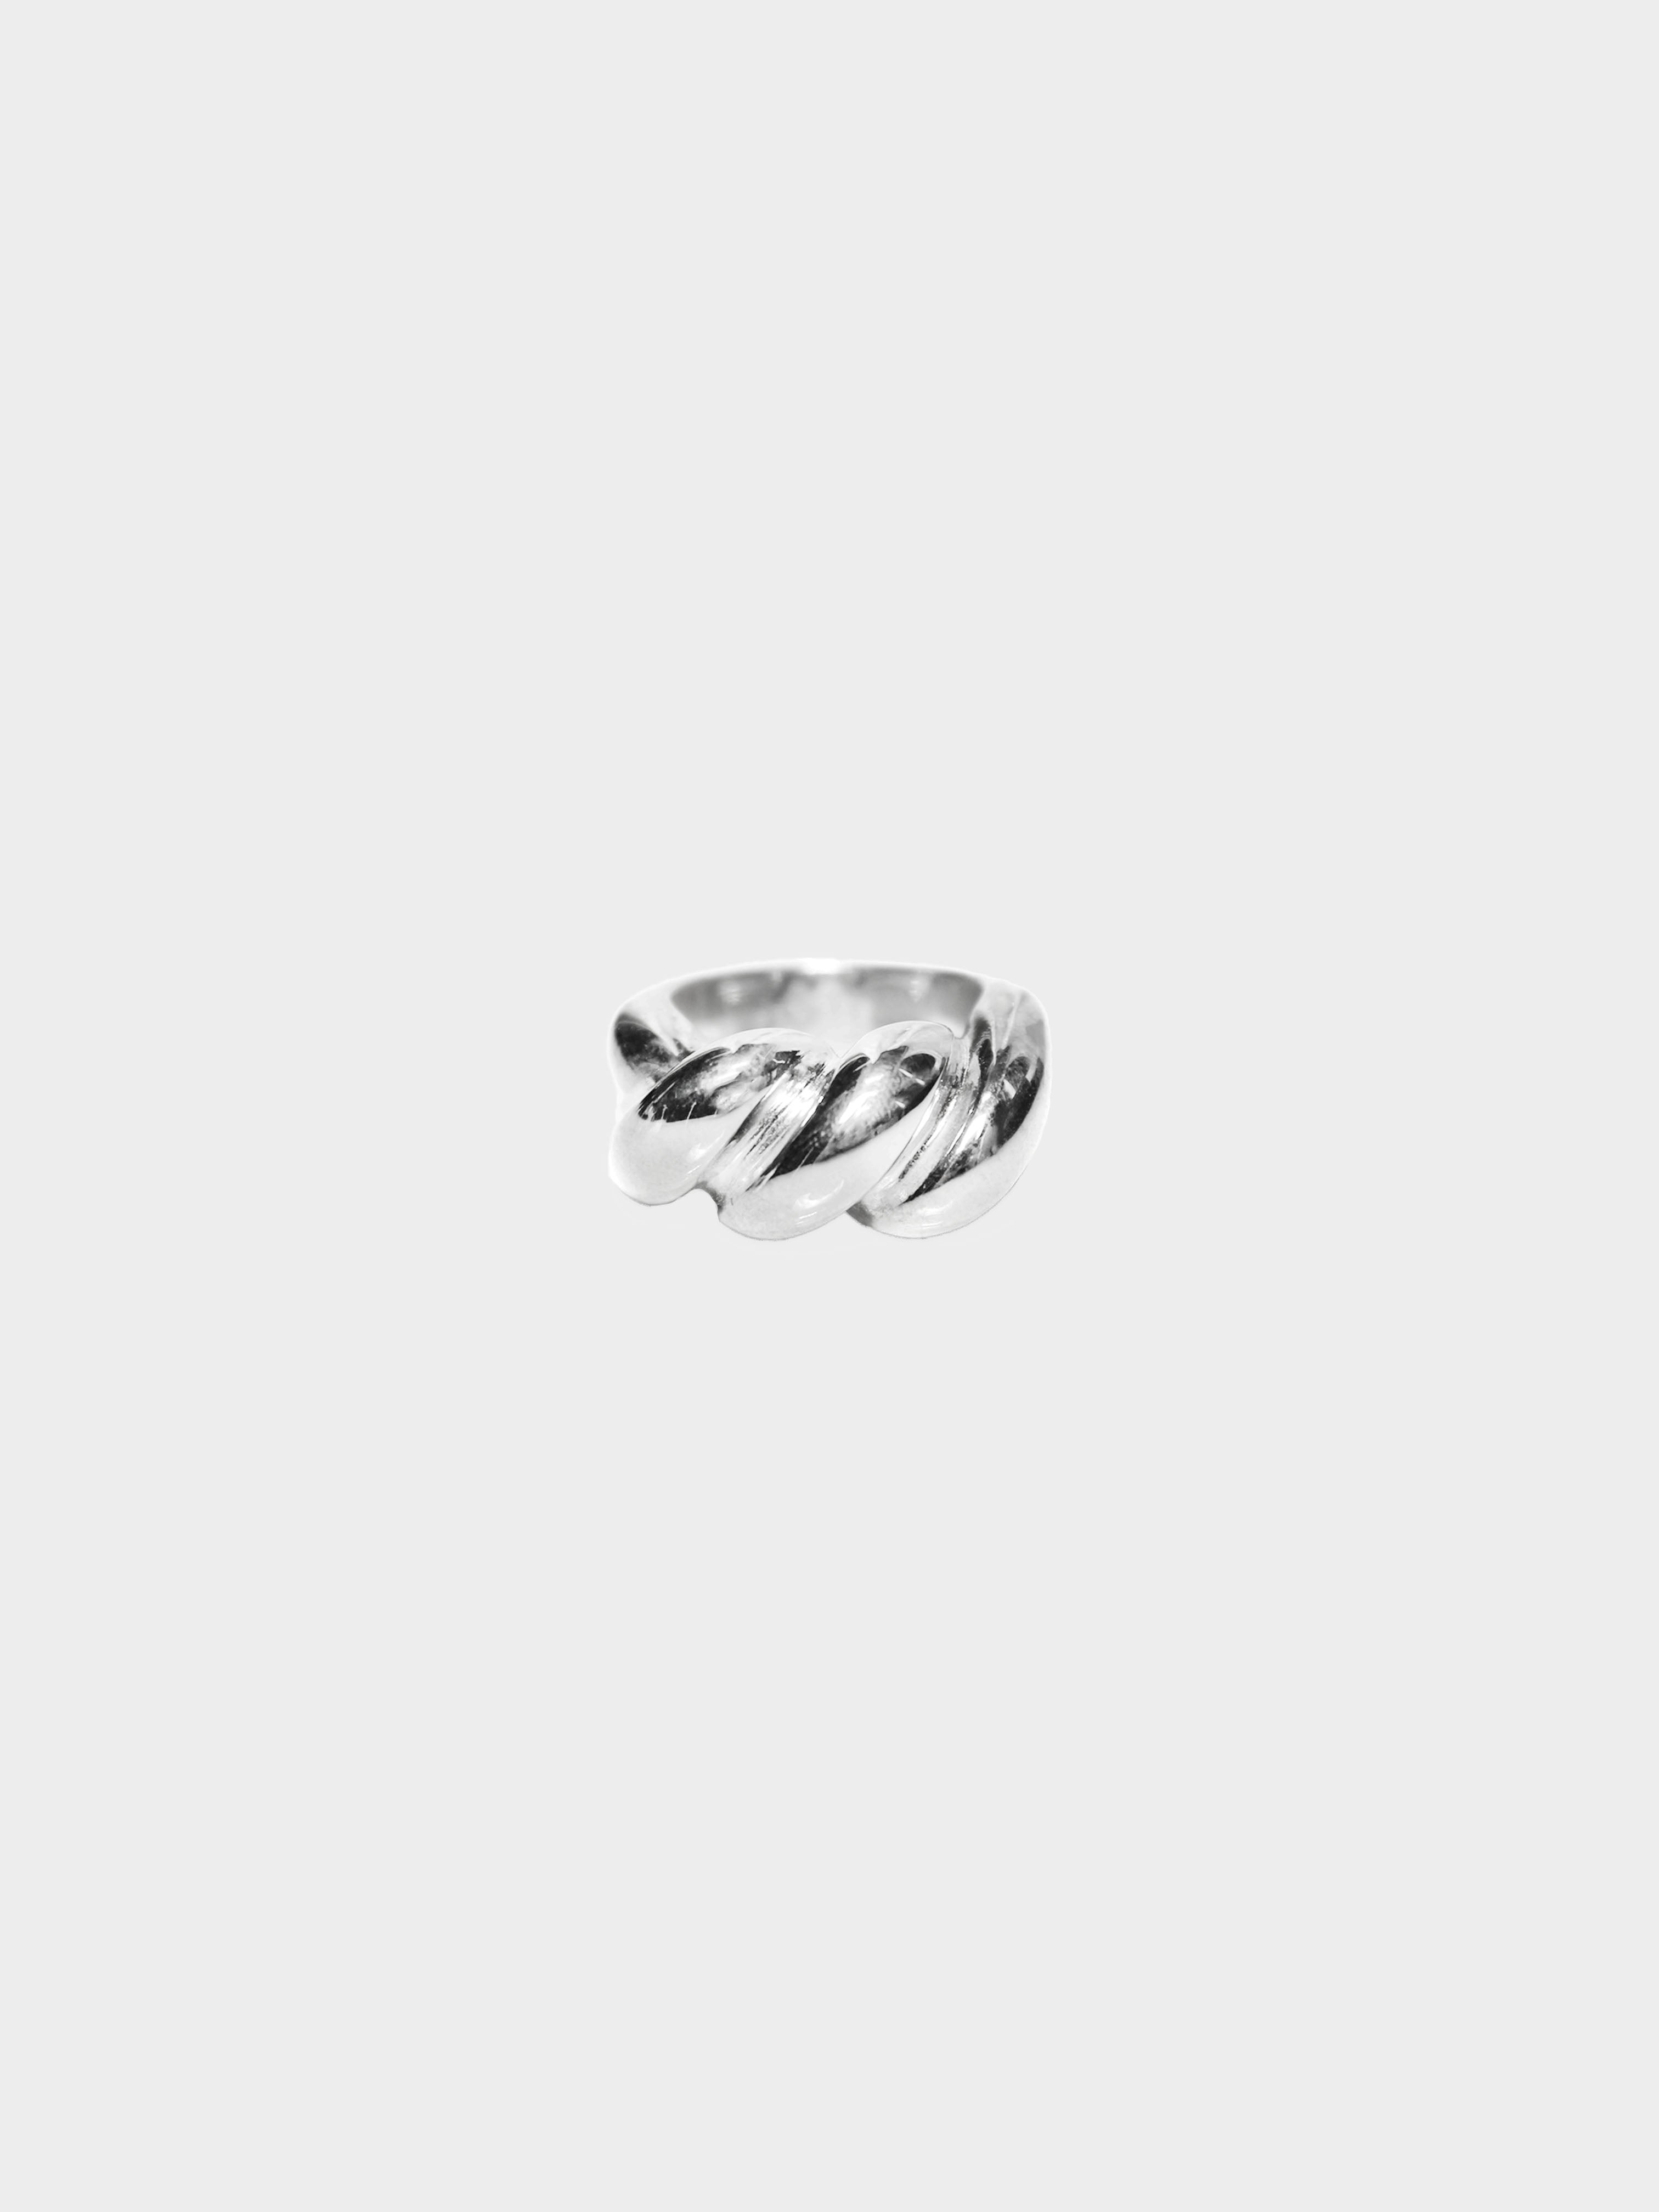 Hermès 1990s Sterling Silver Twist Ring